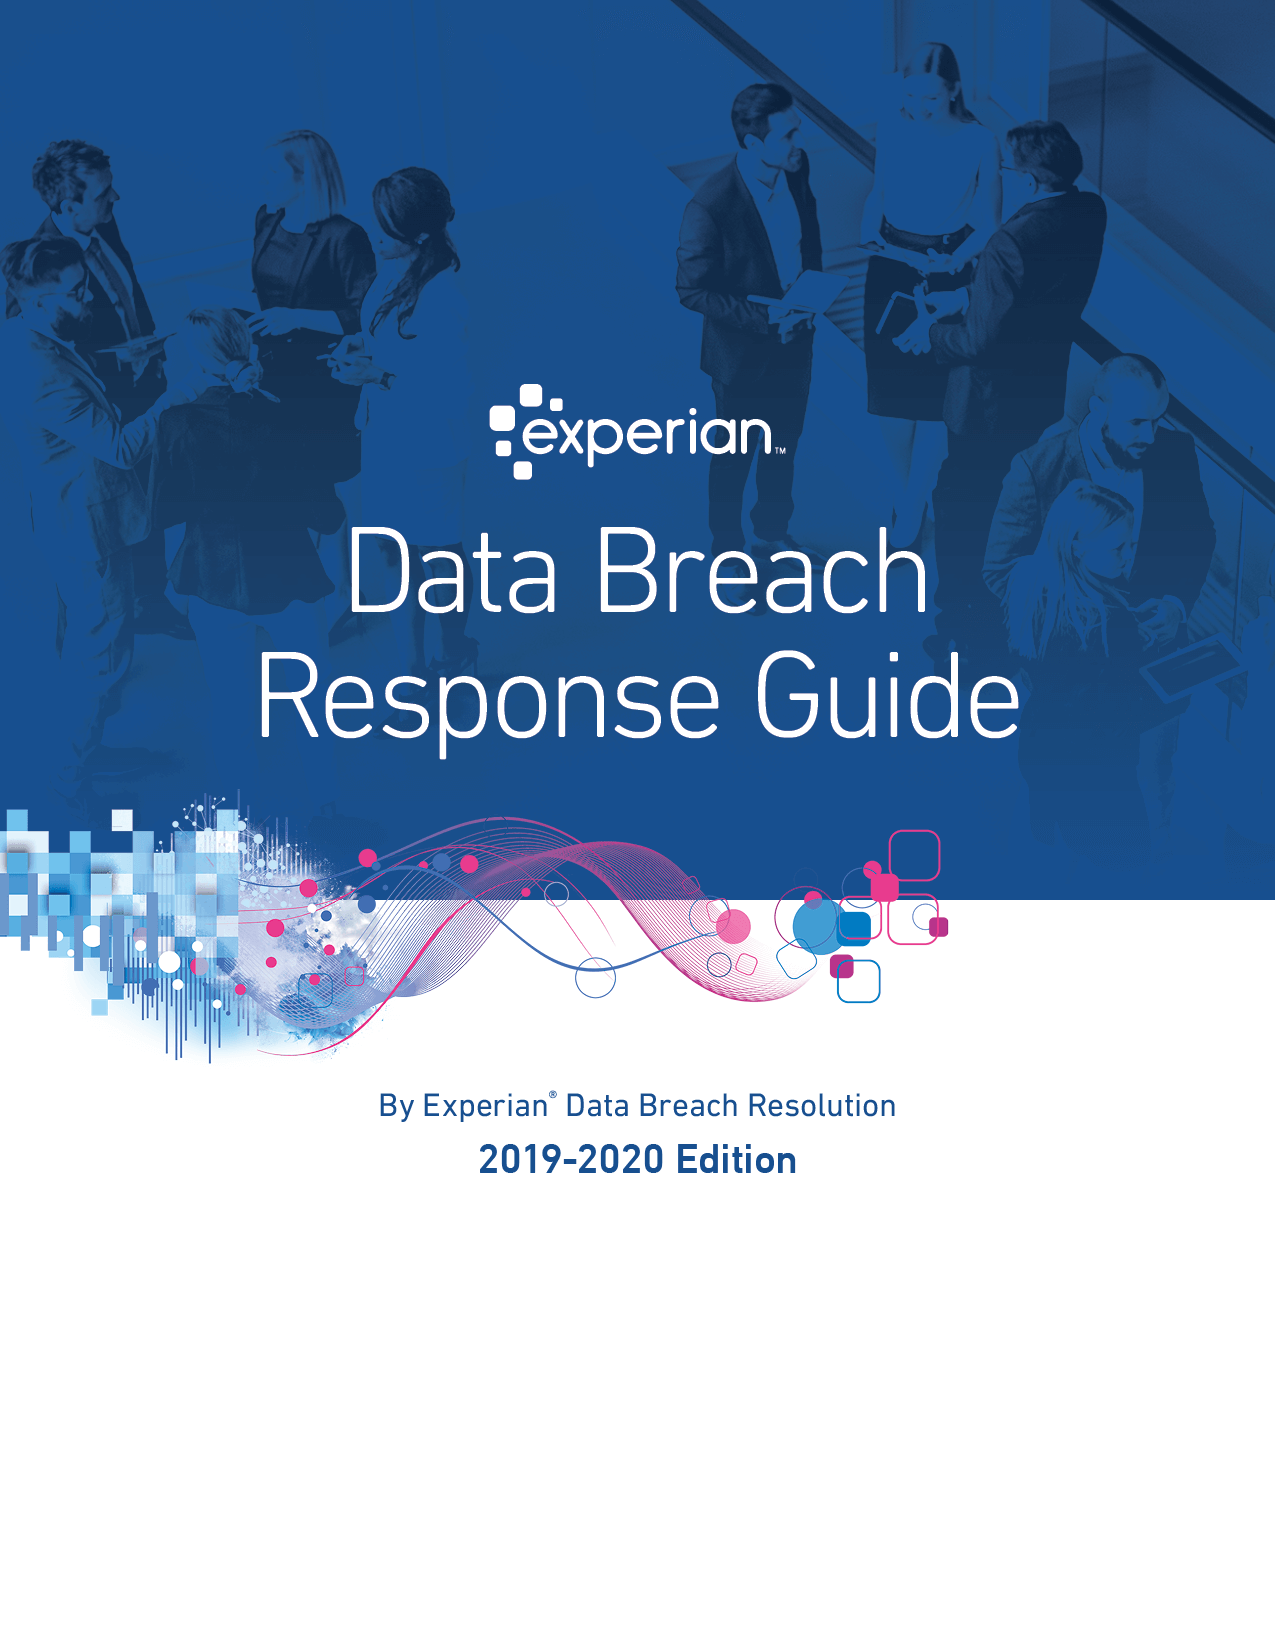 2019-2020 Data Breach Response Guide Image